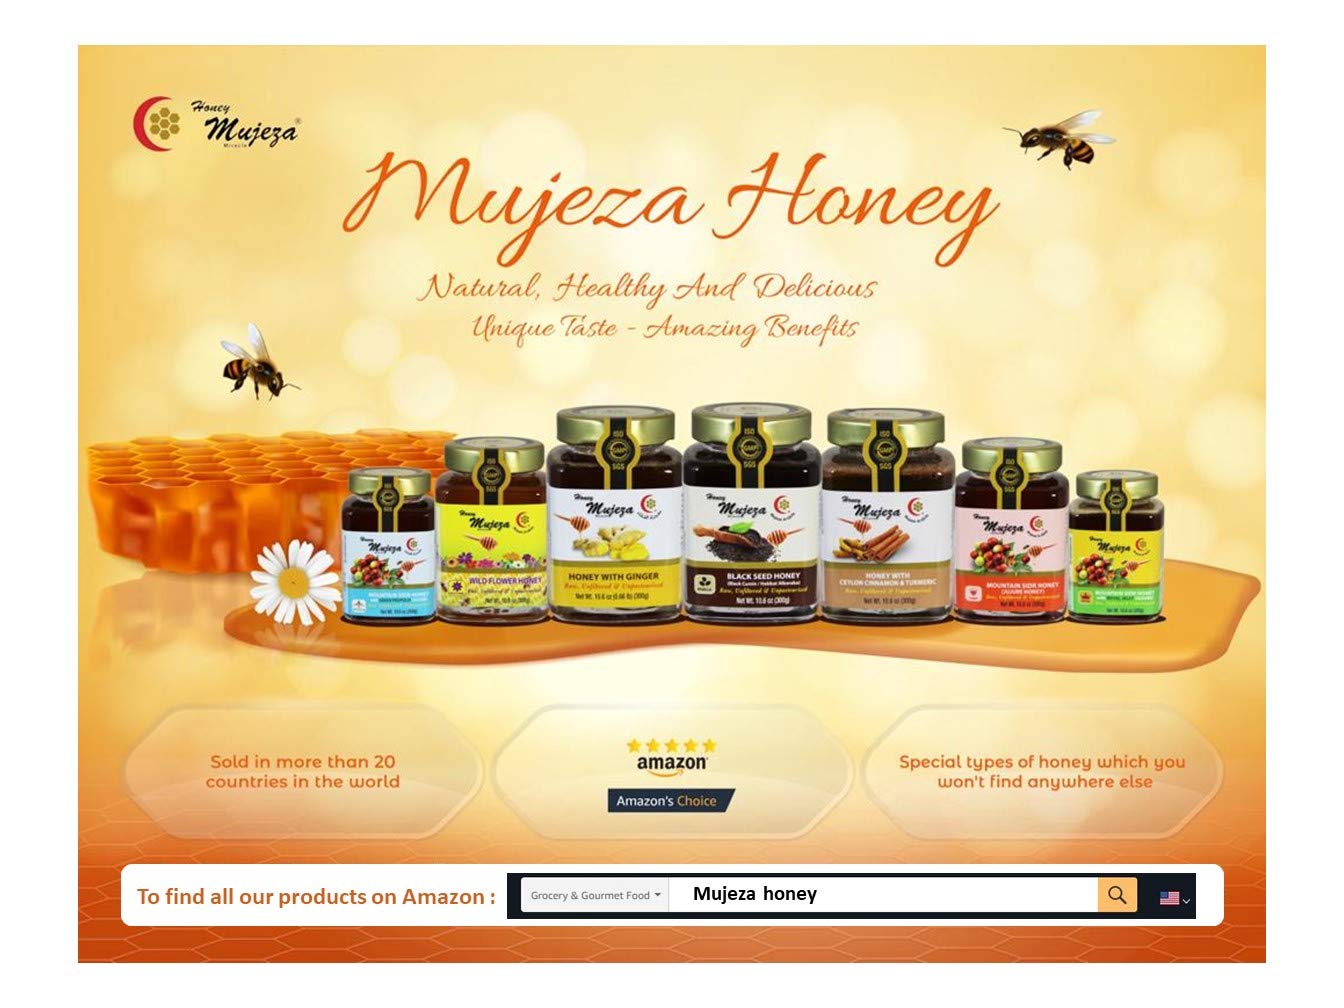 Mujeza Black Seed Honey with Propolis - Not Mixed with Oil or Powder - Gluten Free - Non GMO - Organic Honey - Immune Booster - 100% Natural Raw Honey (250g /8.8oz) Mujeza Al Shifa